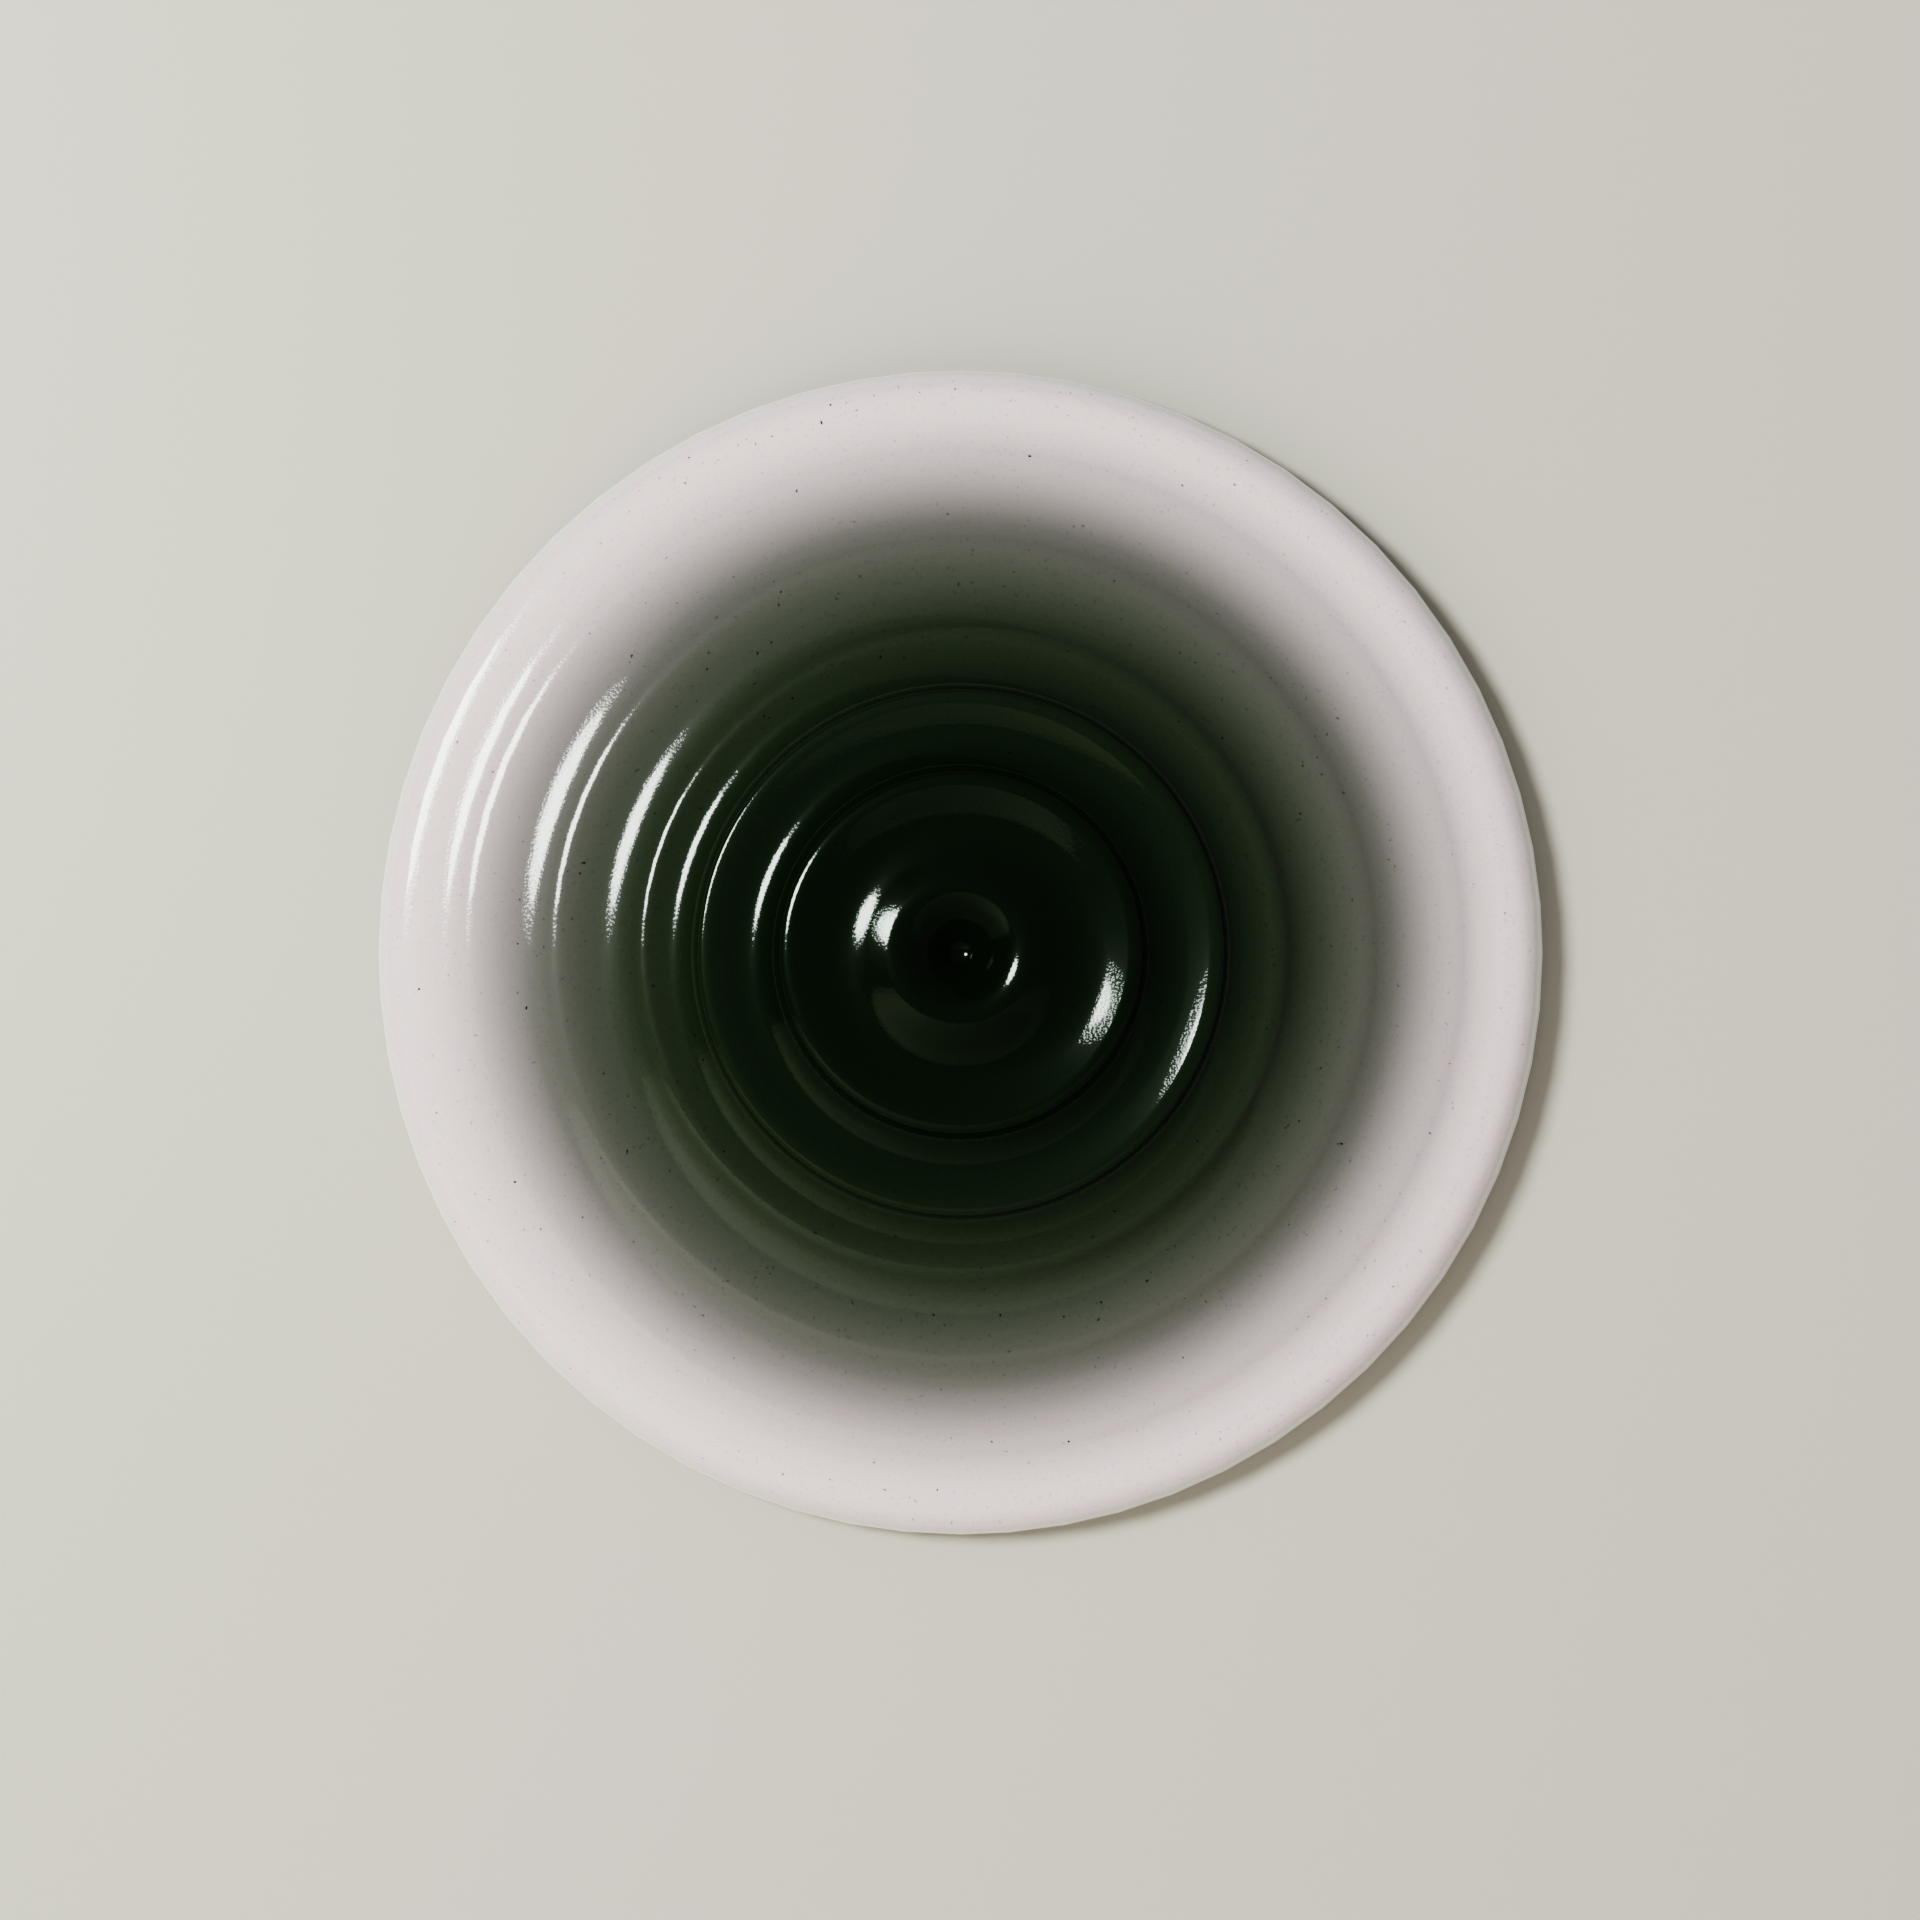 photo of ceramic object